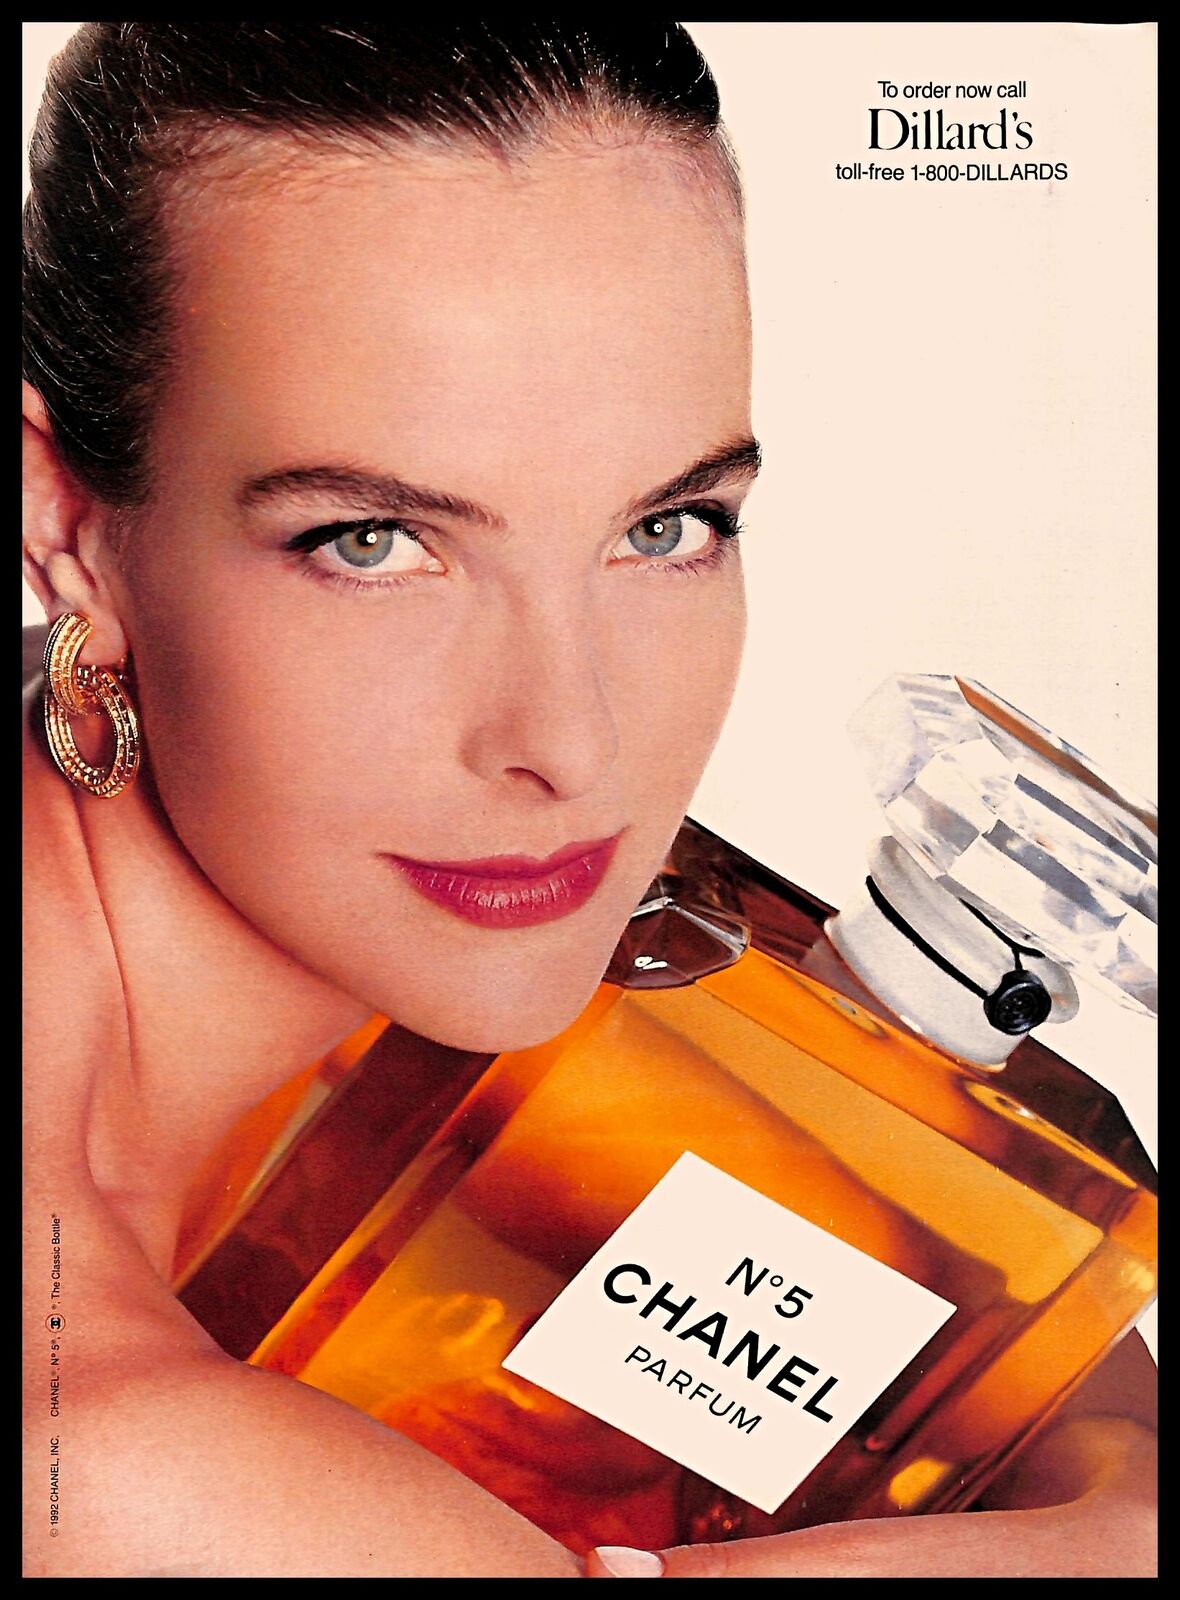 1993 Chanel No 5 Perfume Vintage PRINT AD Fragrance Scent Cologne Classic  Bottle | eBay